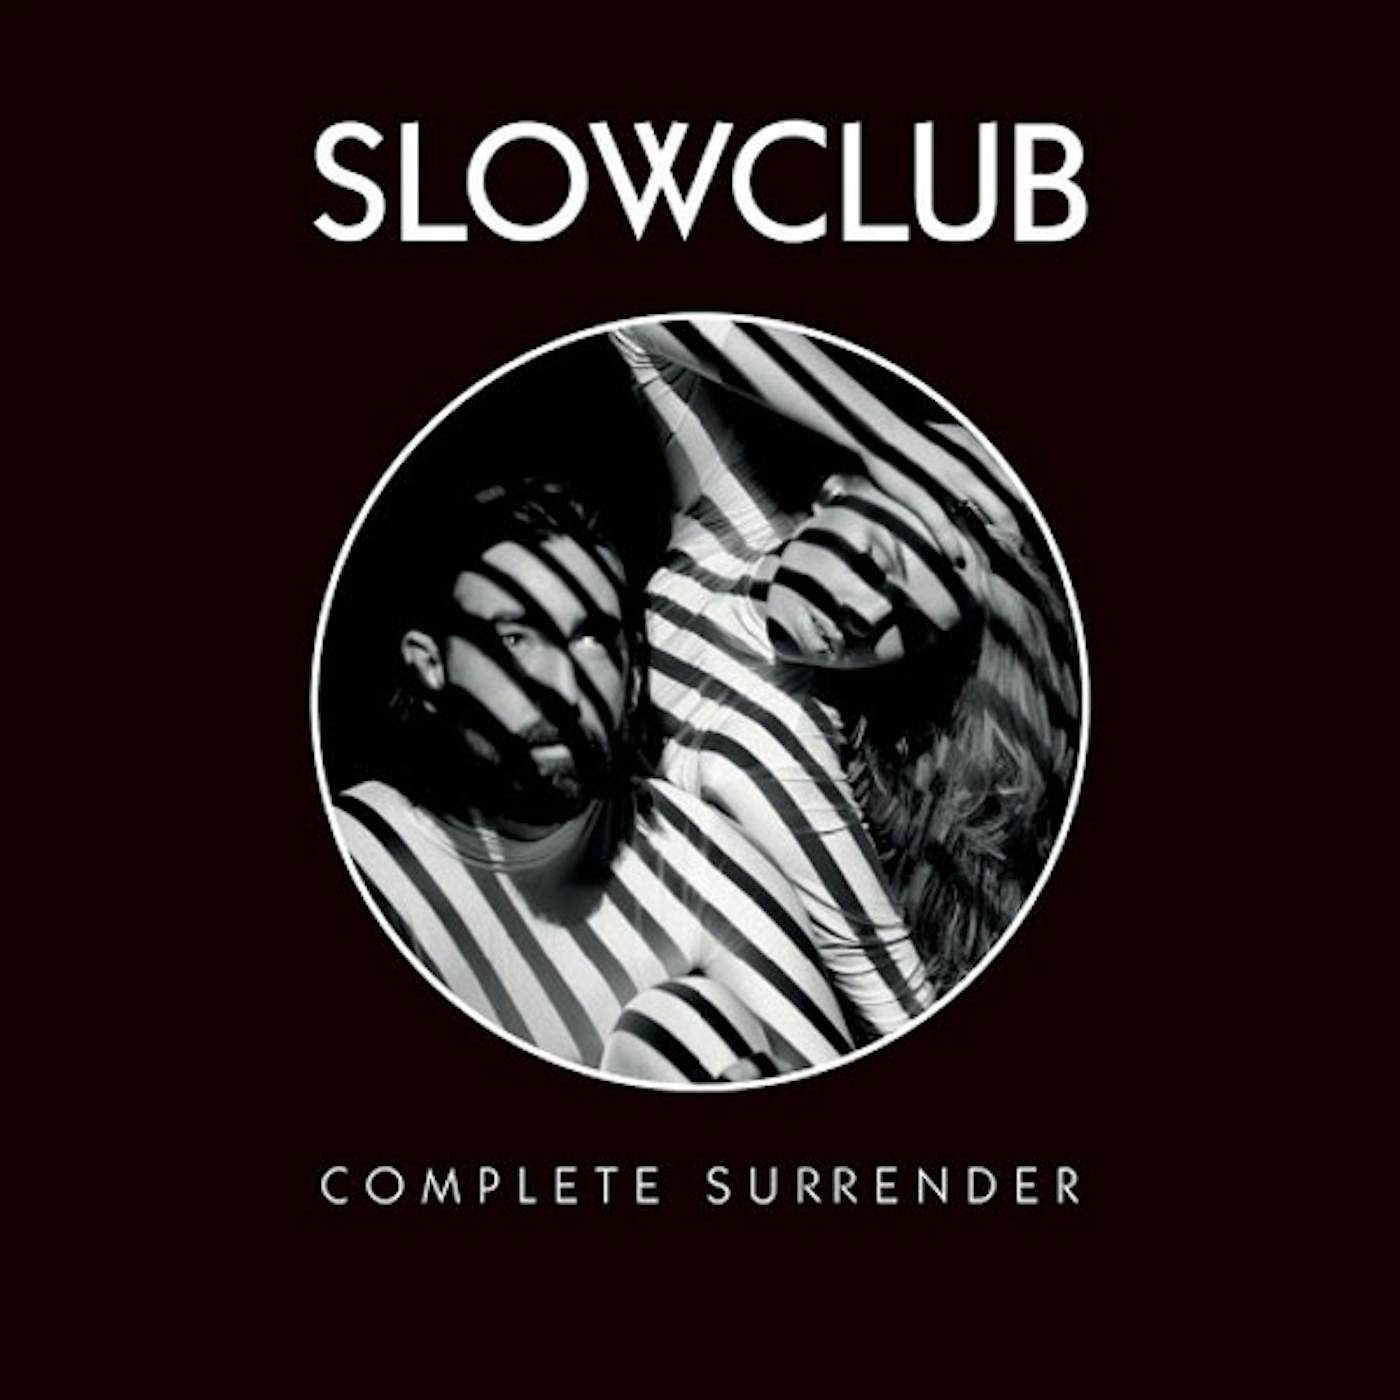 Slow Club Complete Surrender Vinyl Record